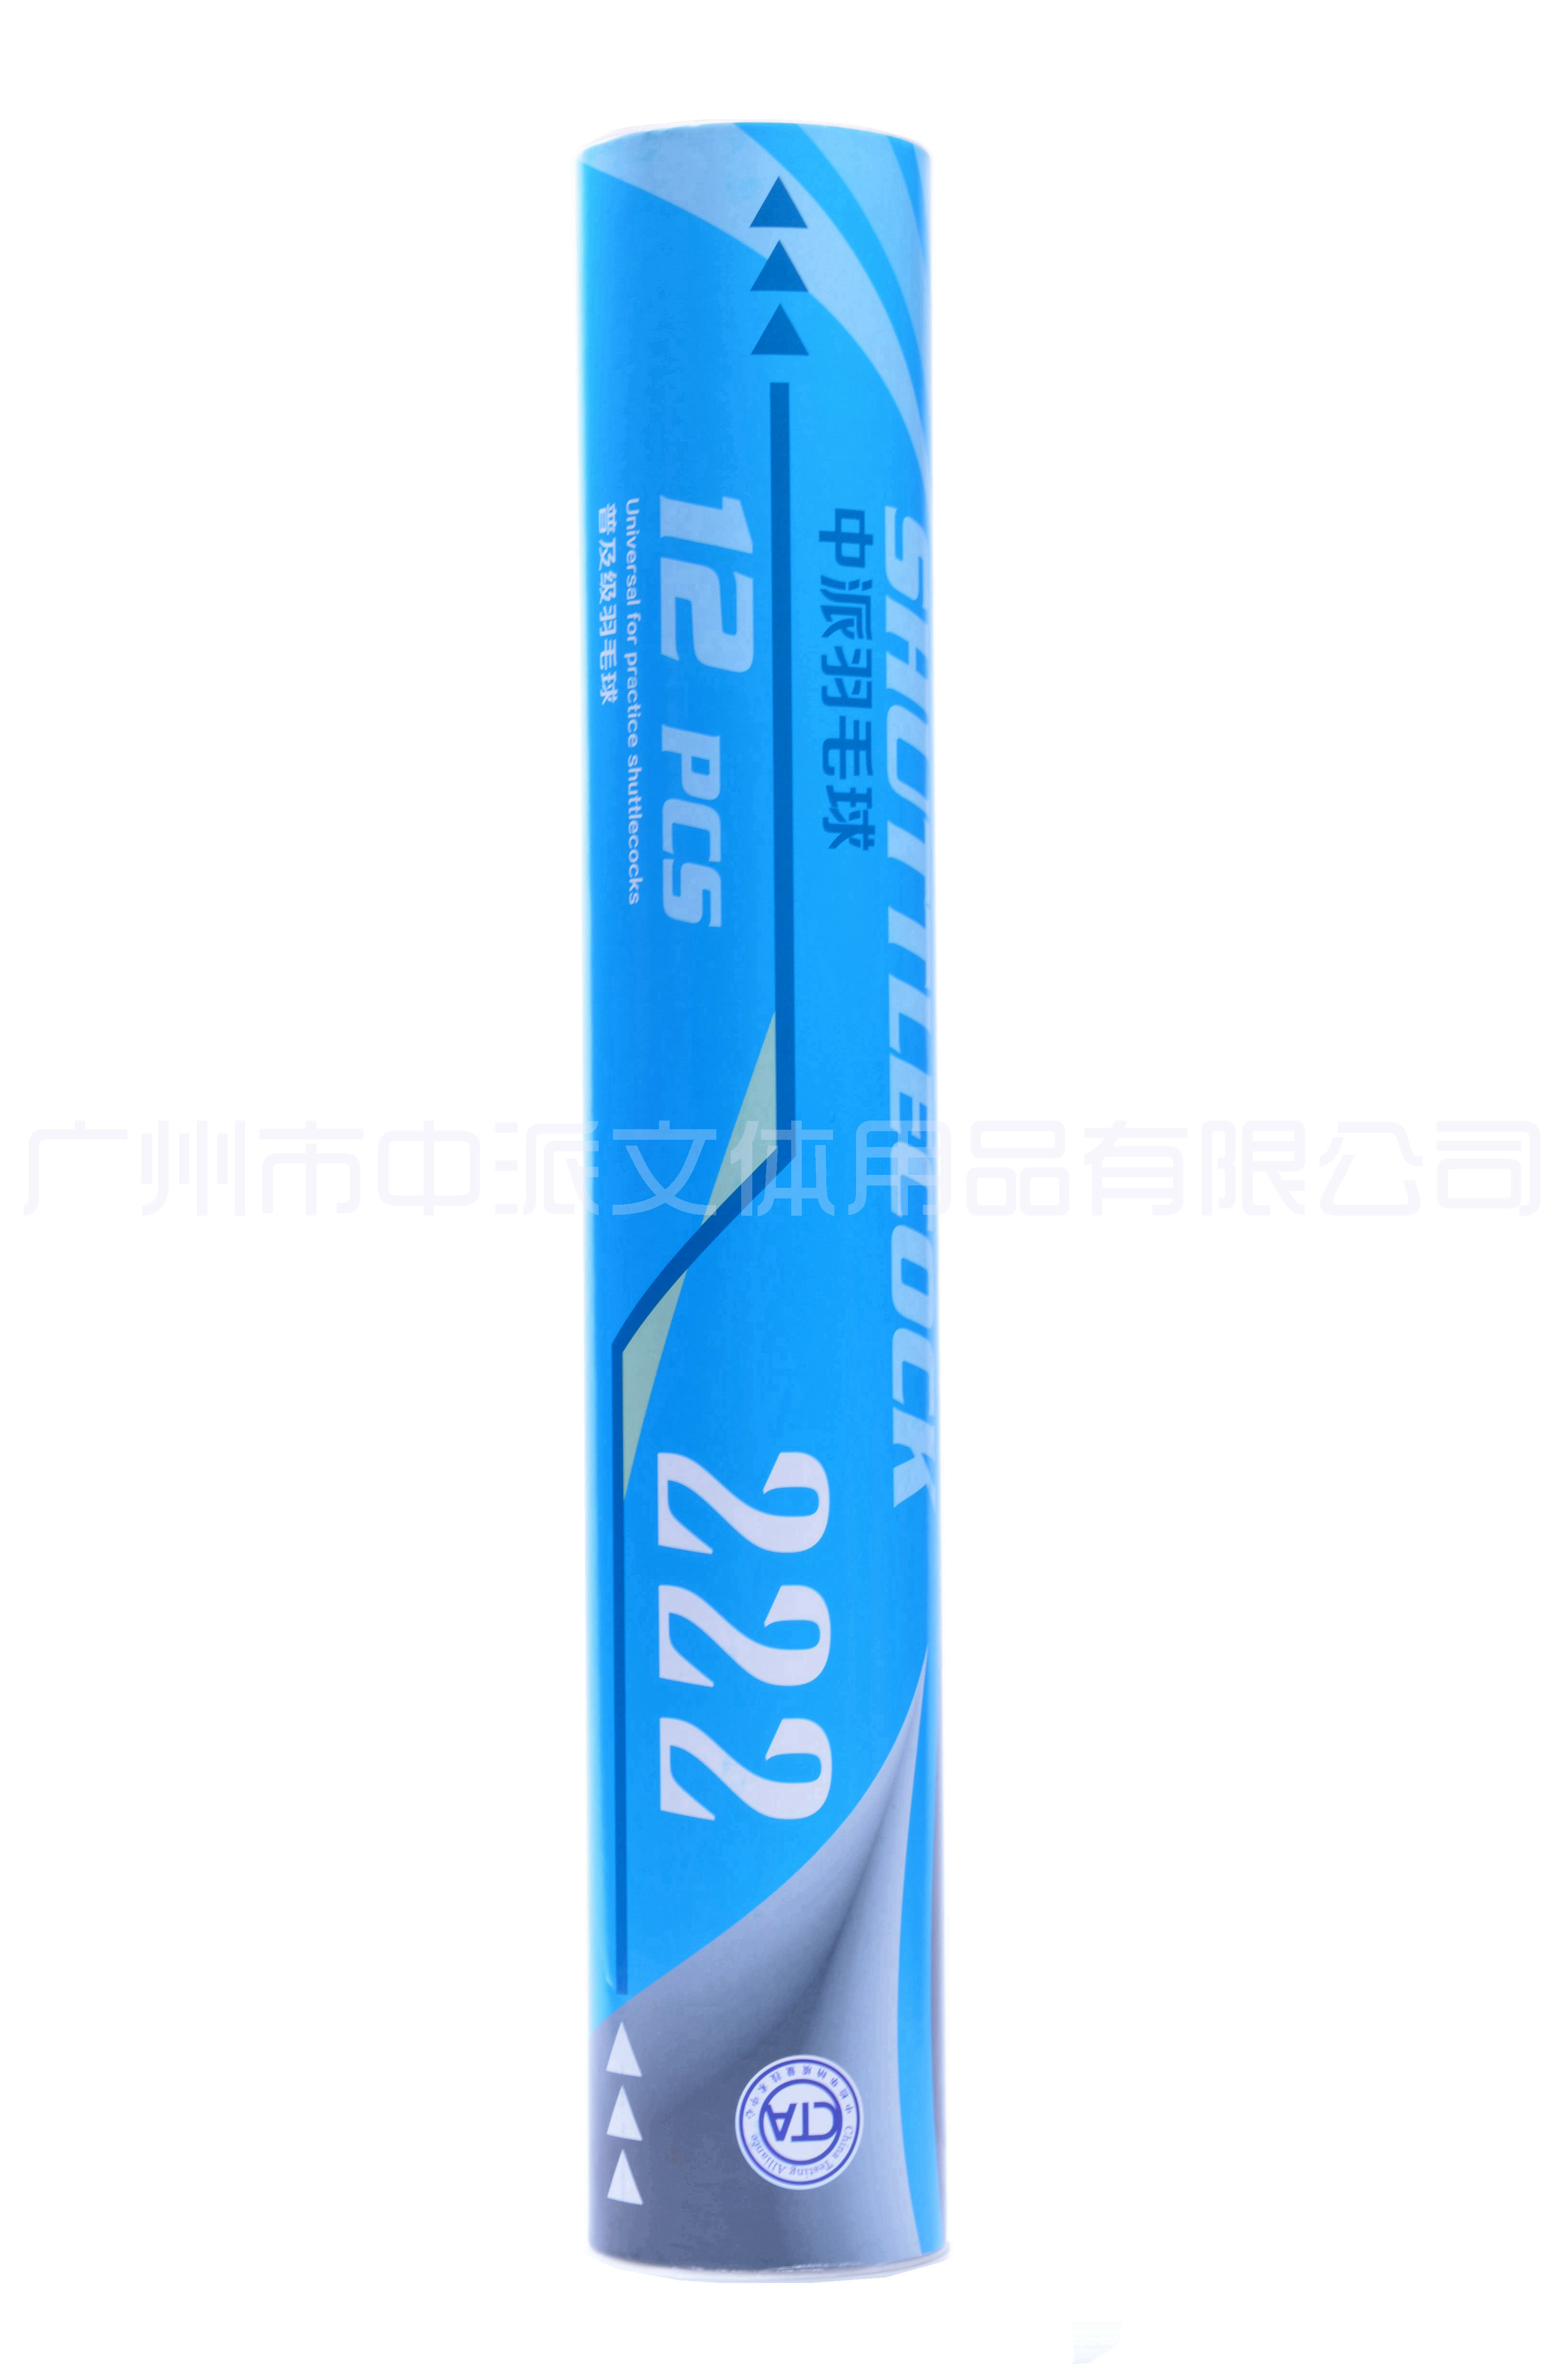 ZP-222中派羽毛球 ZP-222 ZHONGPAI Badminton